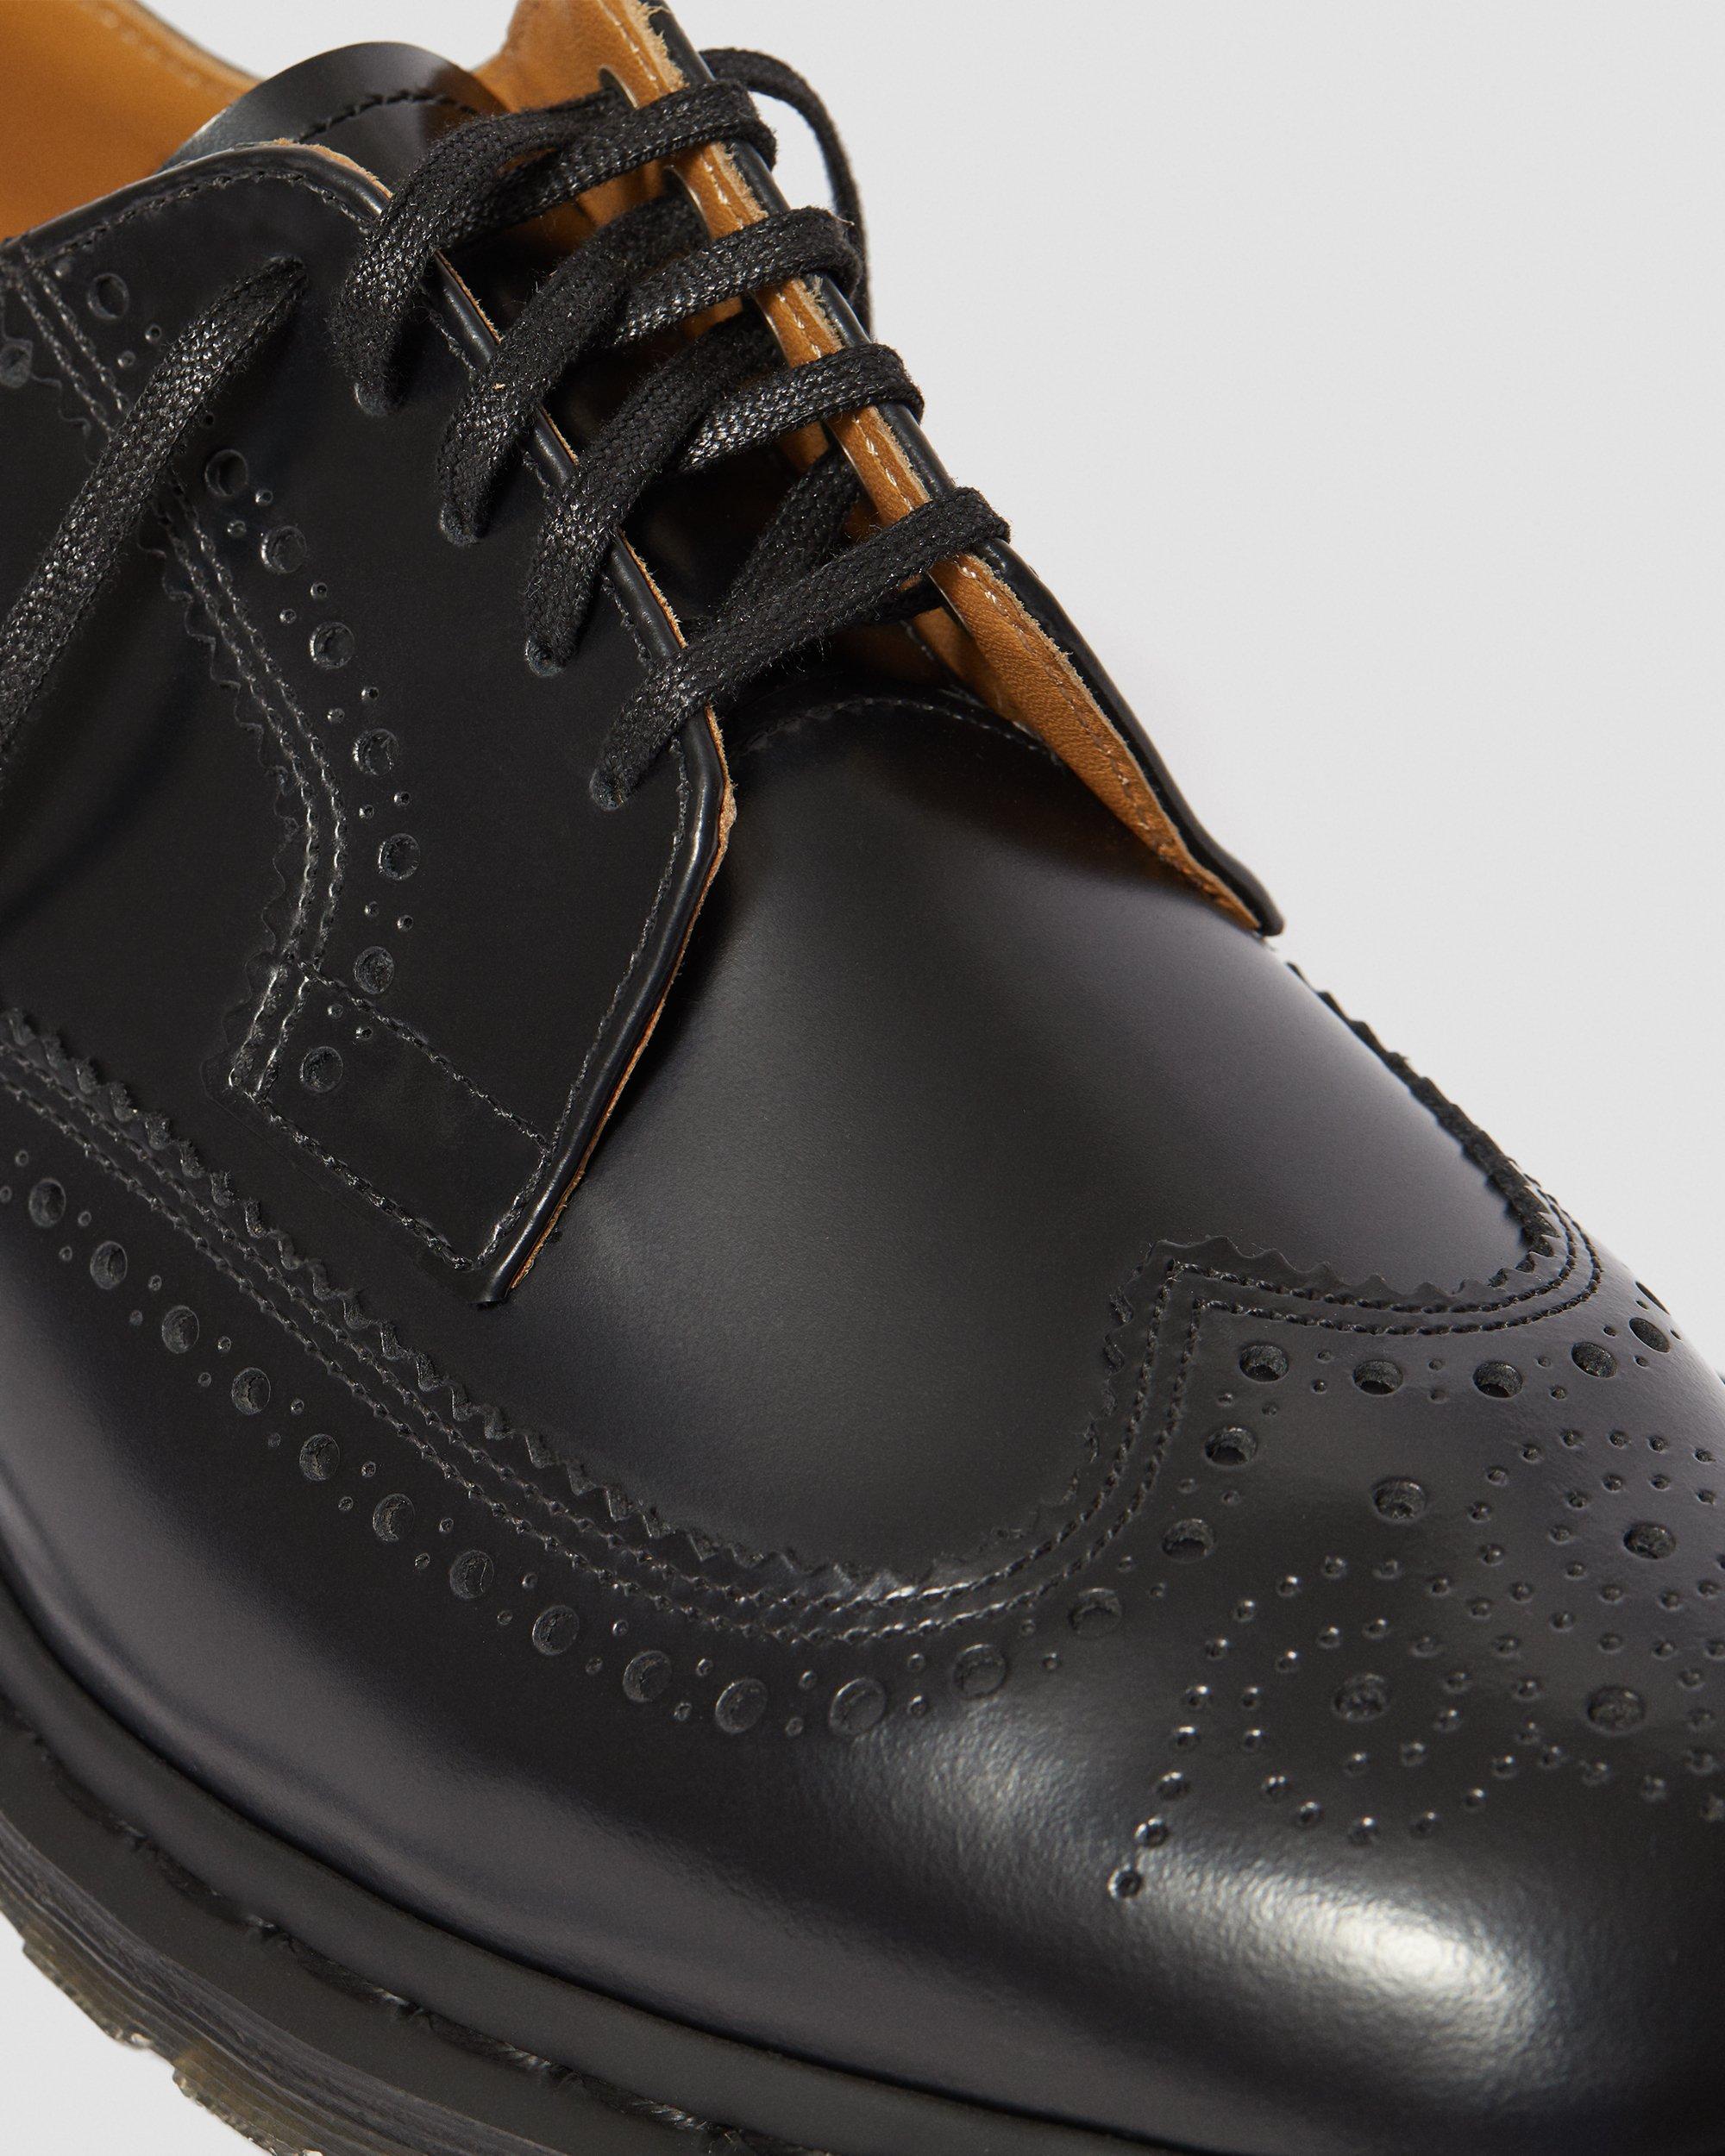 Kelvin II Smooth Leather Brogue Shoes, Black | Dr. Martens